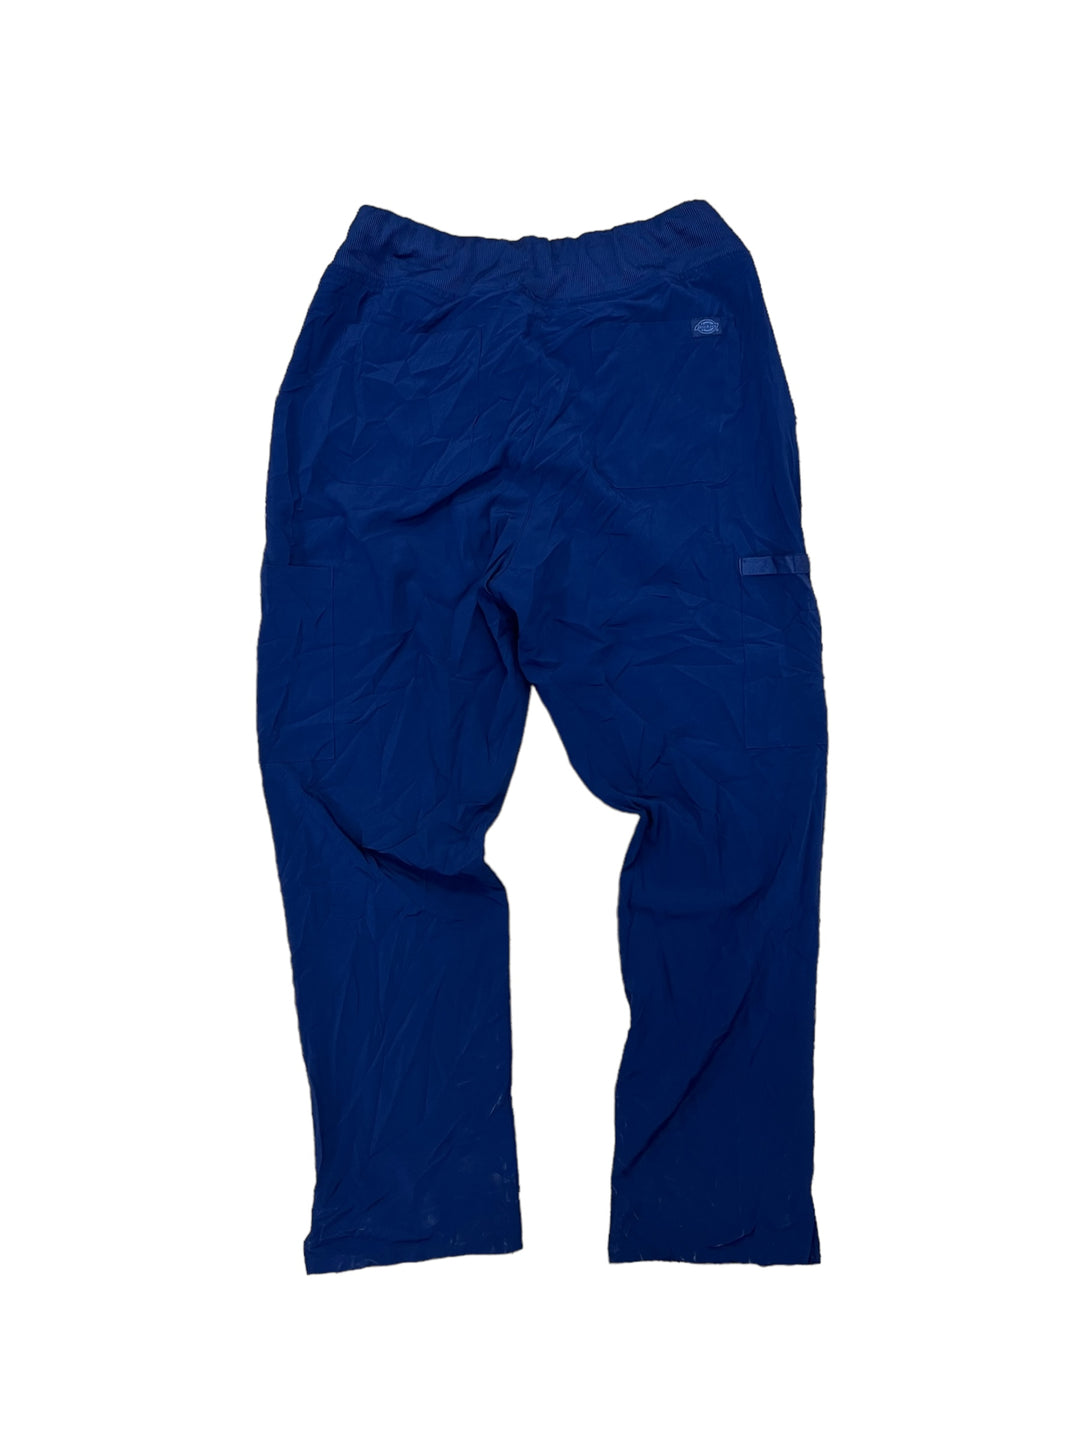 Dickies blue sweatpants women’s large